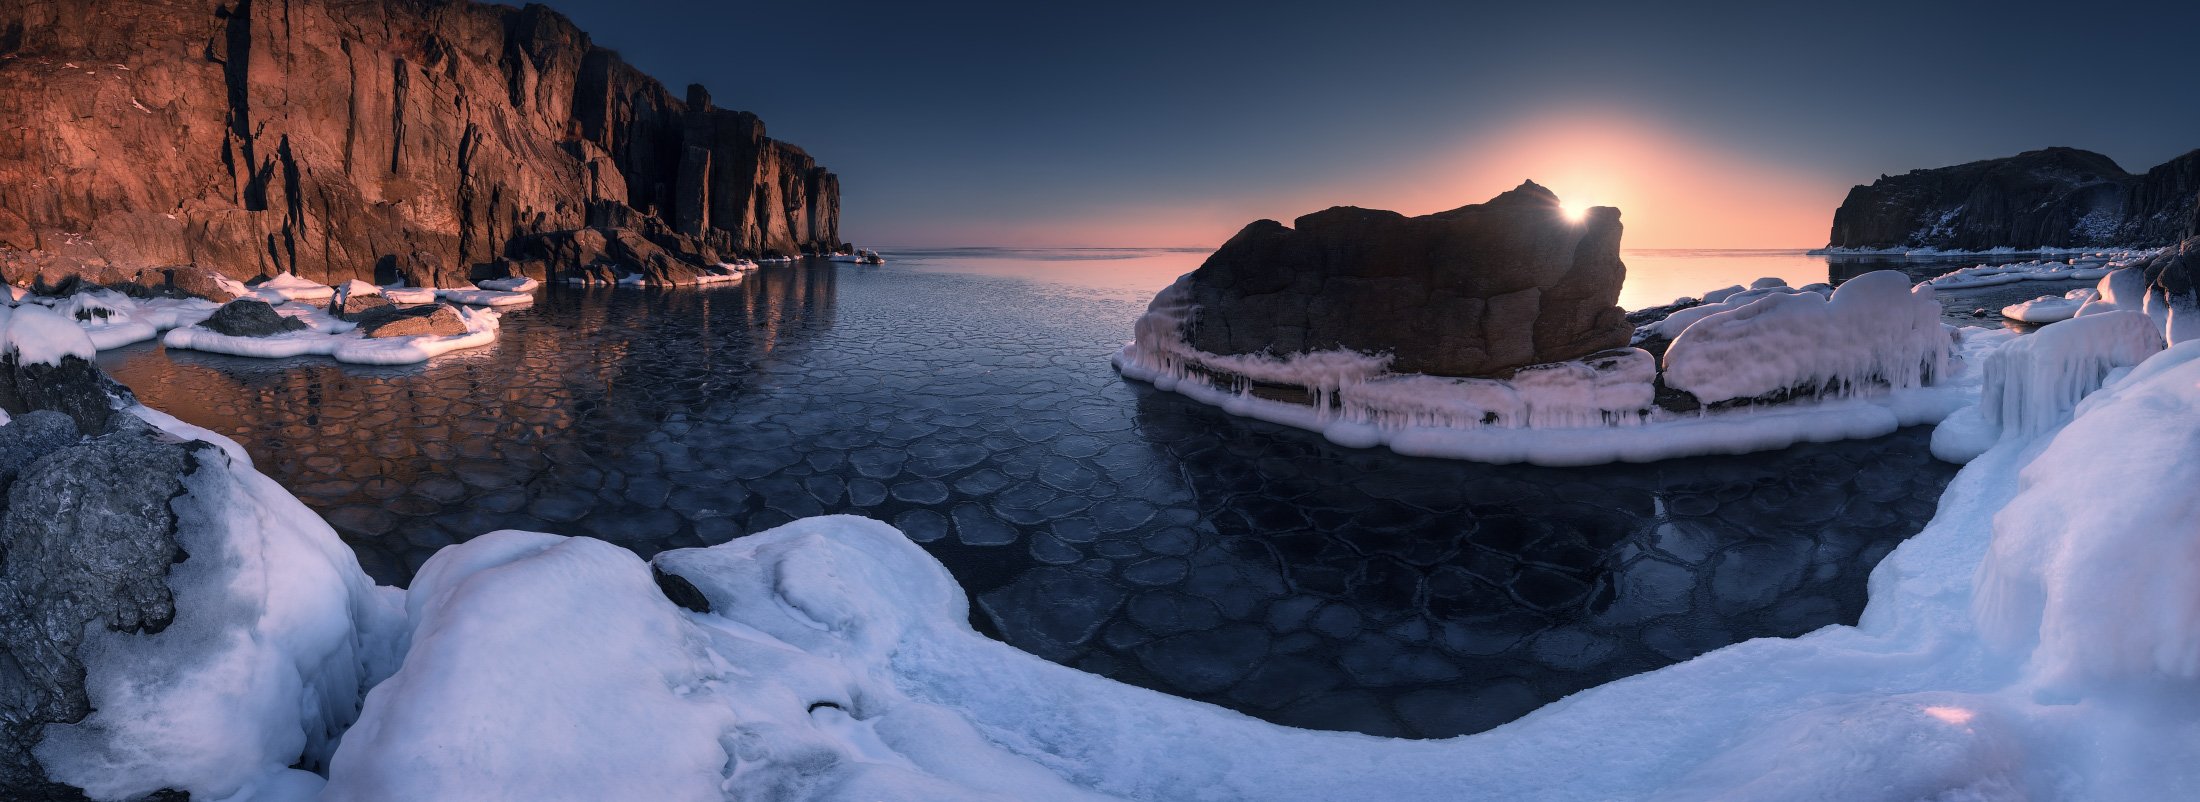 панорама, утро, море, скалы, зима, Андрей Кровлин